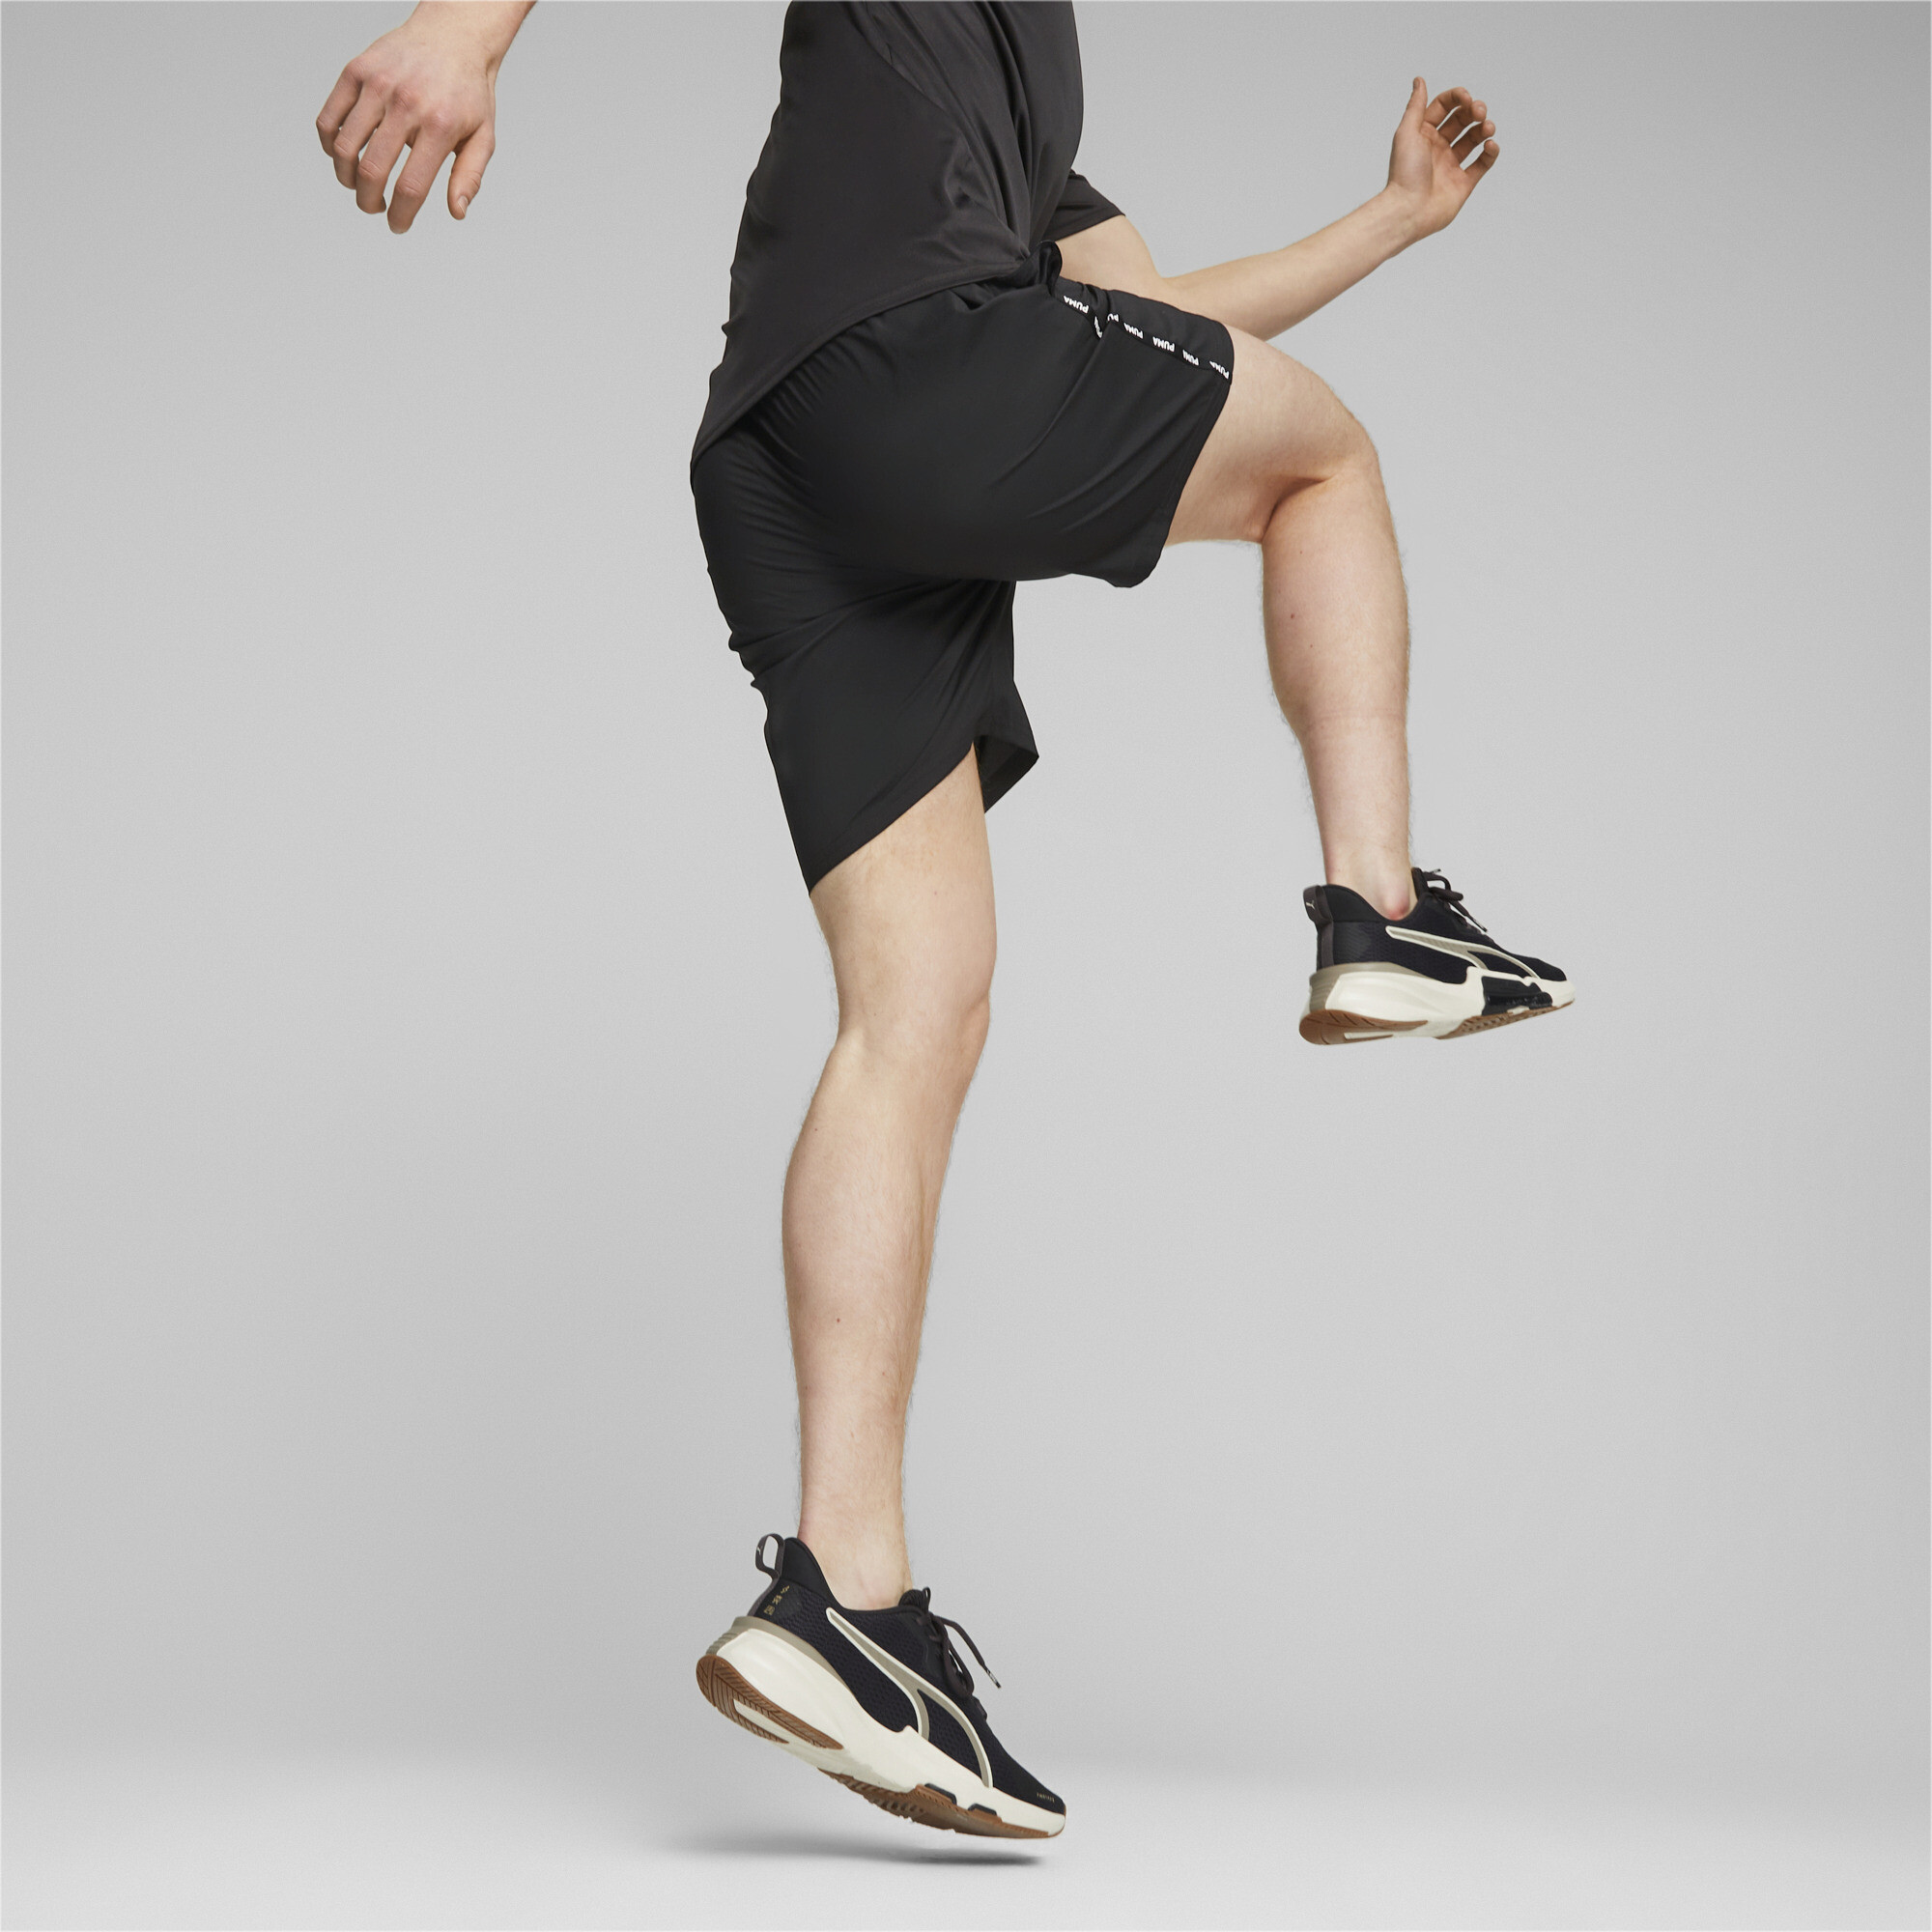 Men's PUMA Fit 7 Training Shorts In Black, Size XL